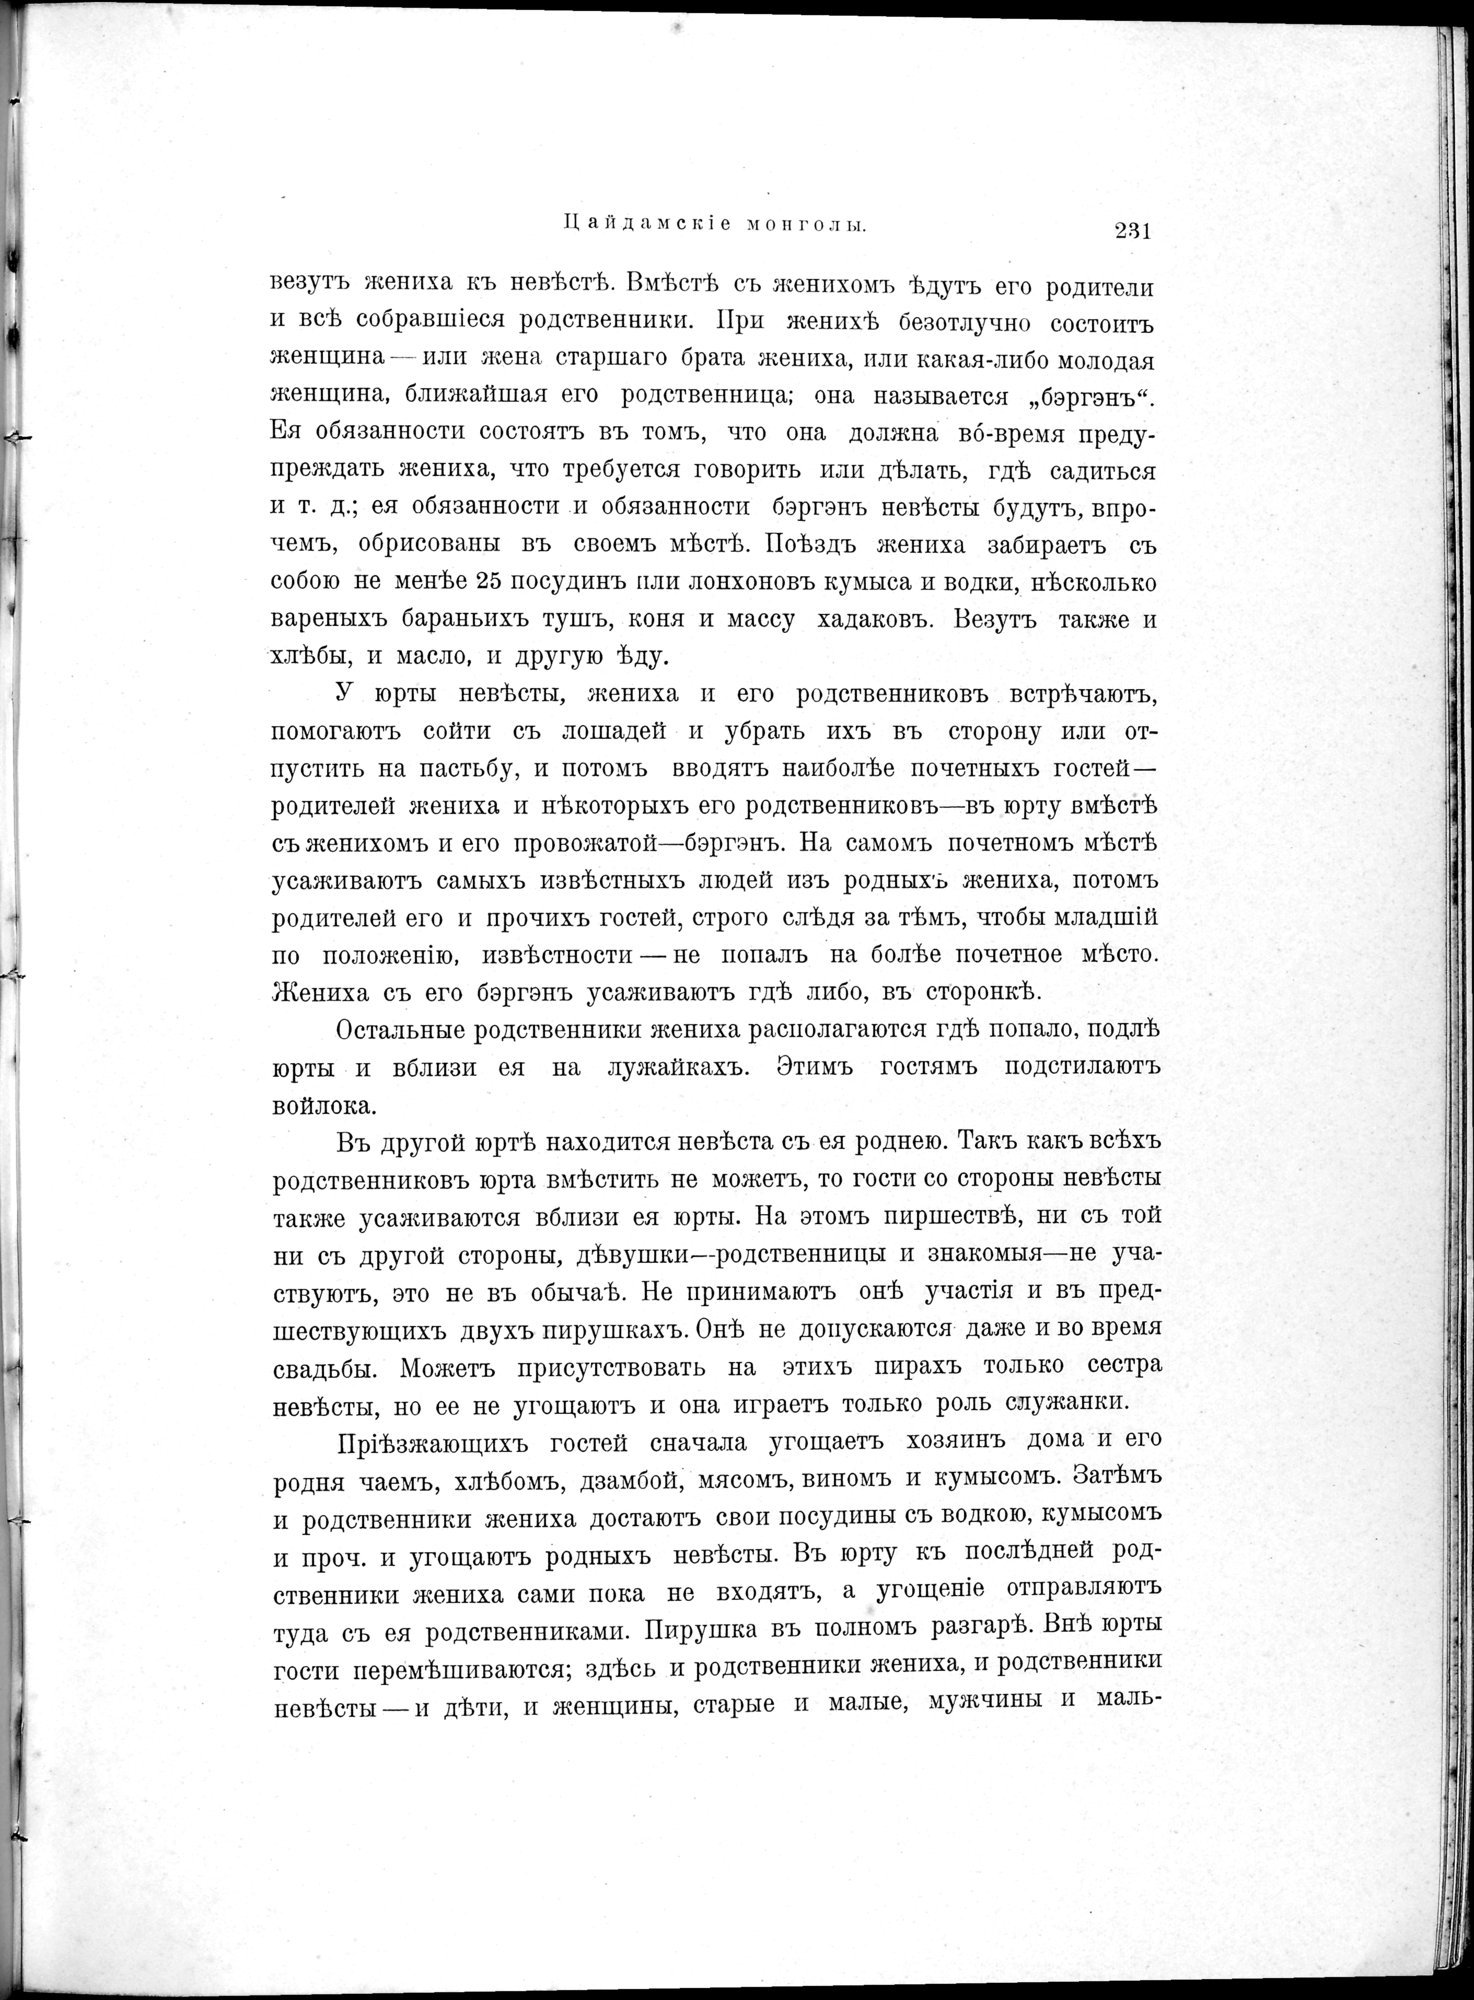 Mongoliia i Kam : vol.1 / Page 283 (Grayscale High Resolution Image)